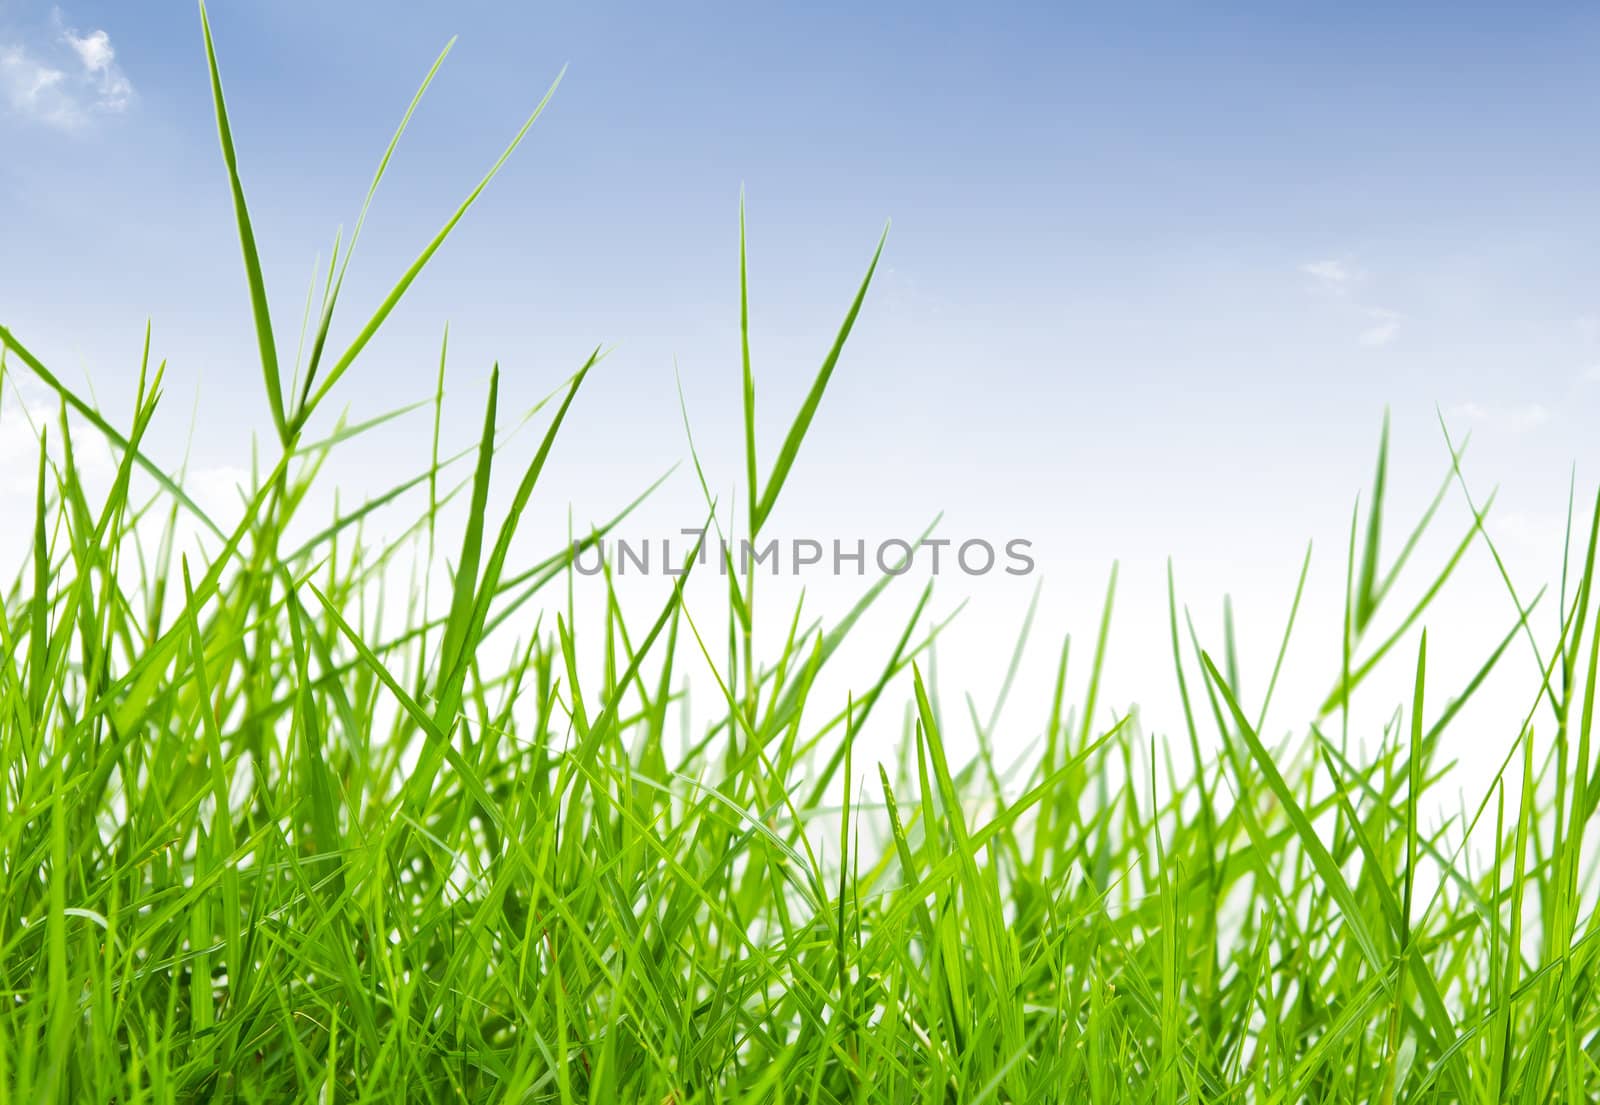 green grass against blue sky